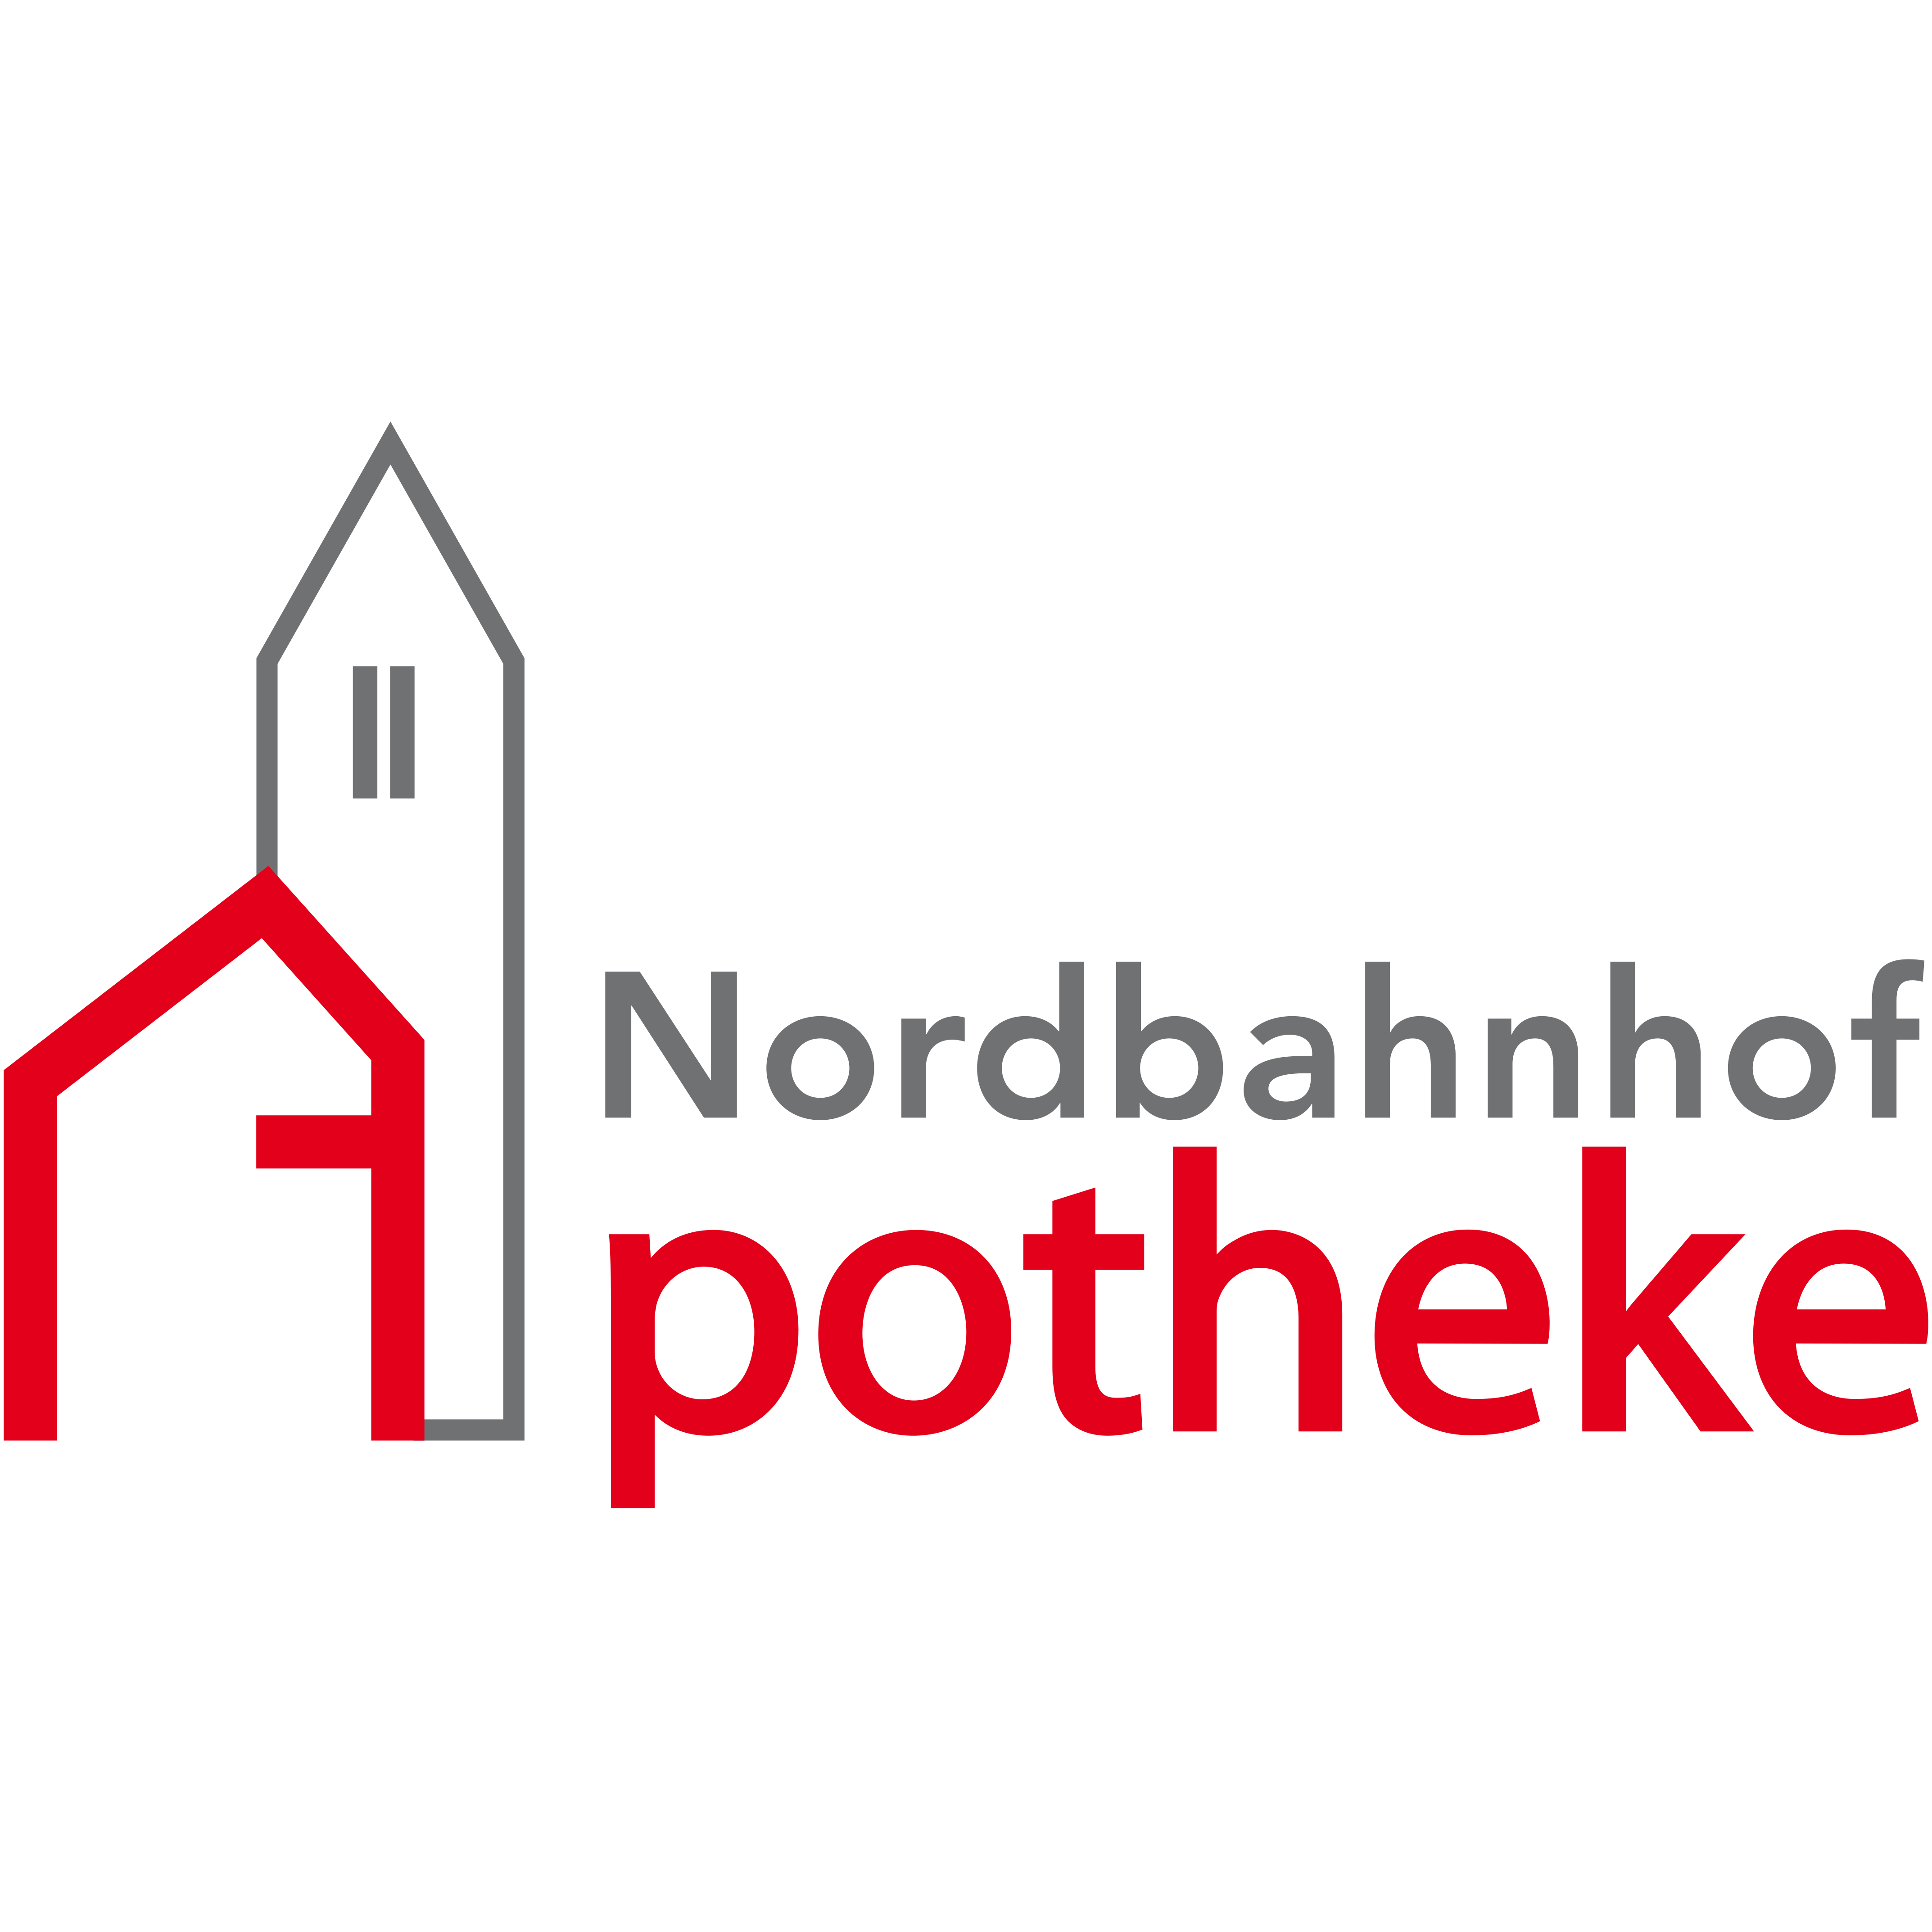 Nordbahnhof Apotheke in Stuttgart - Logo